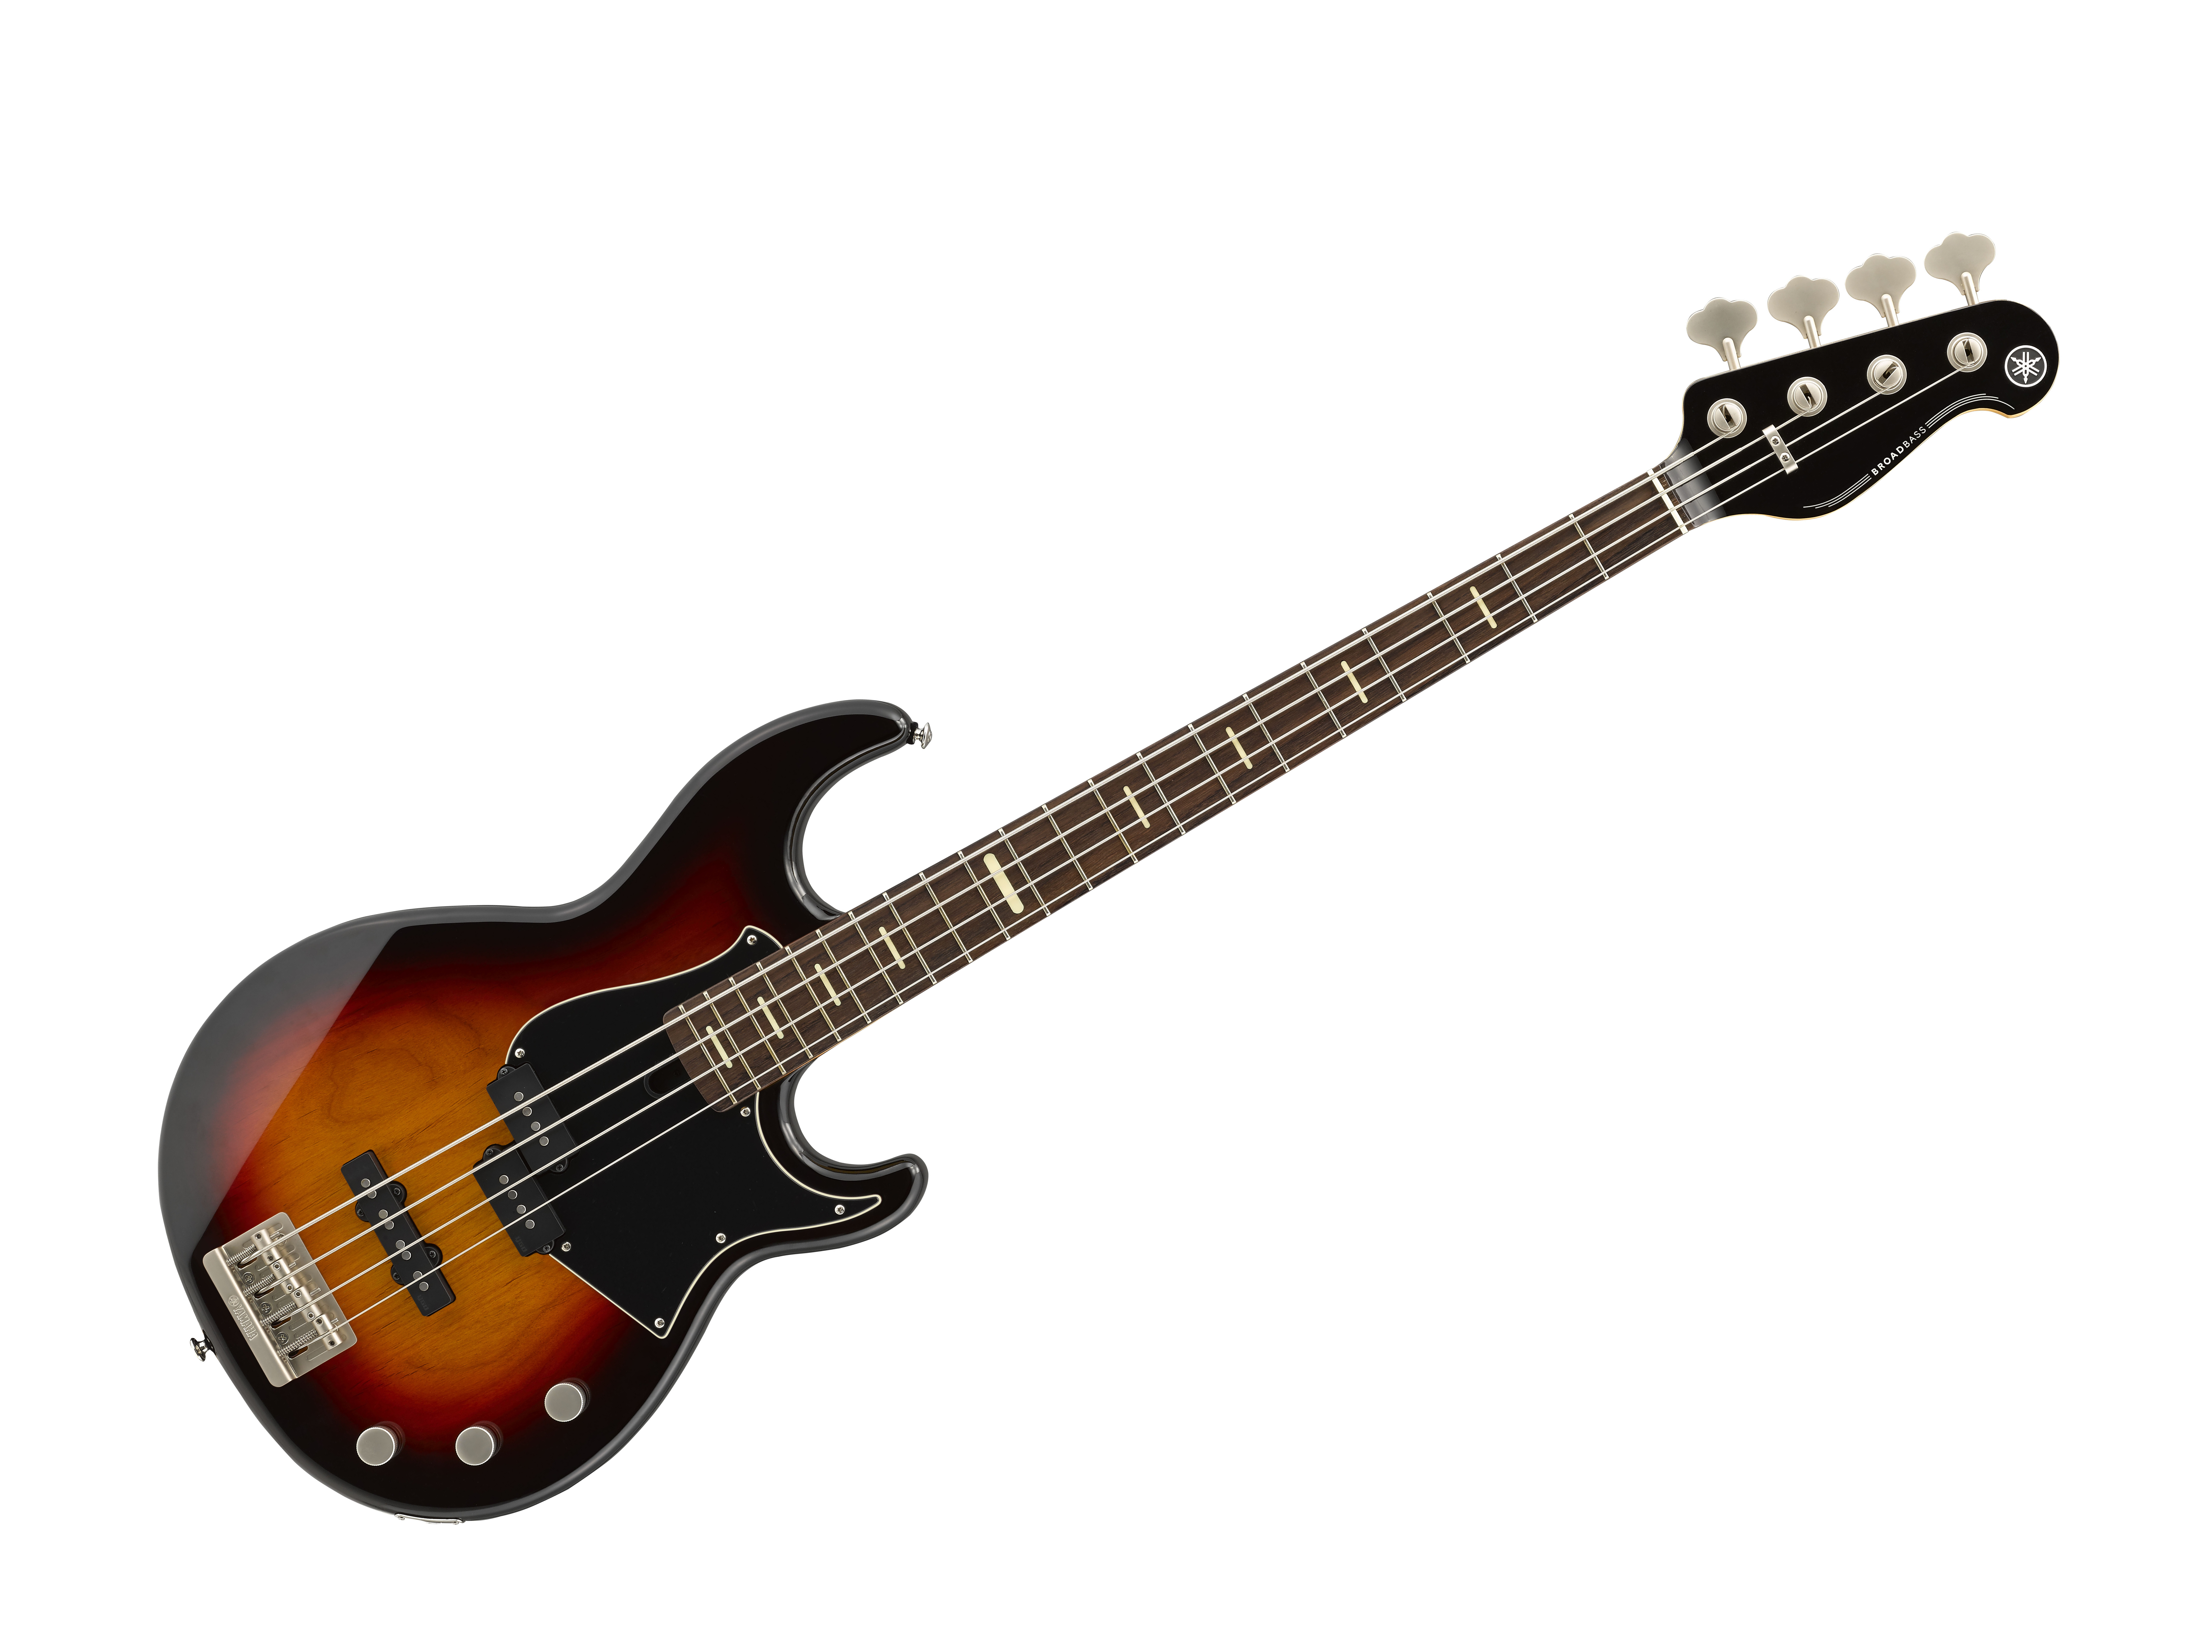 Yamaha BBP34 VSB E-Bass